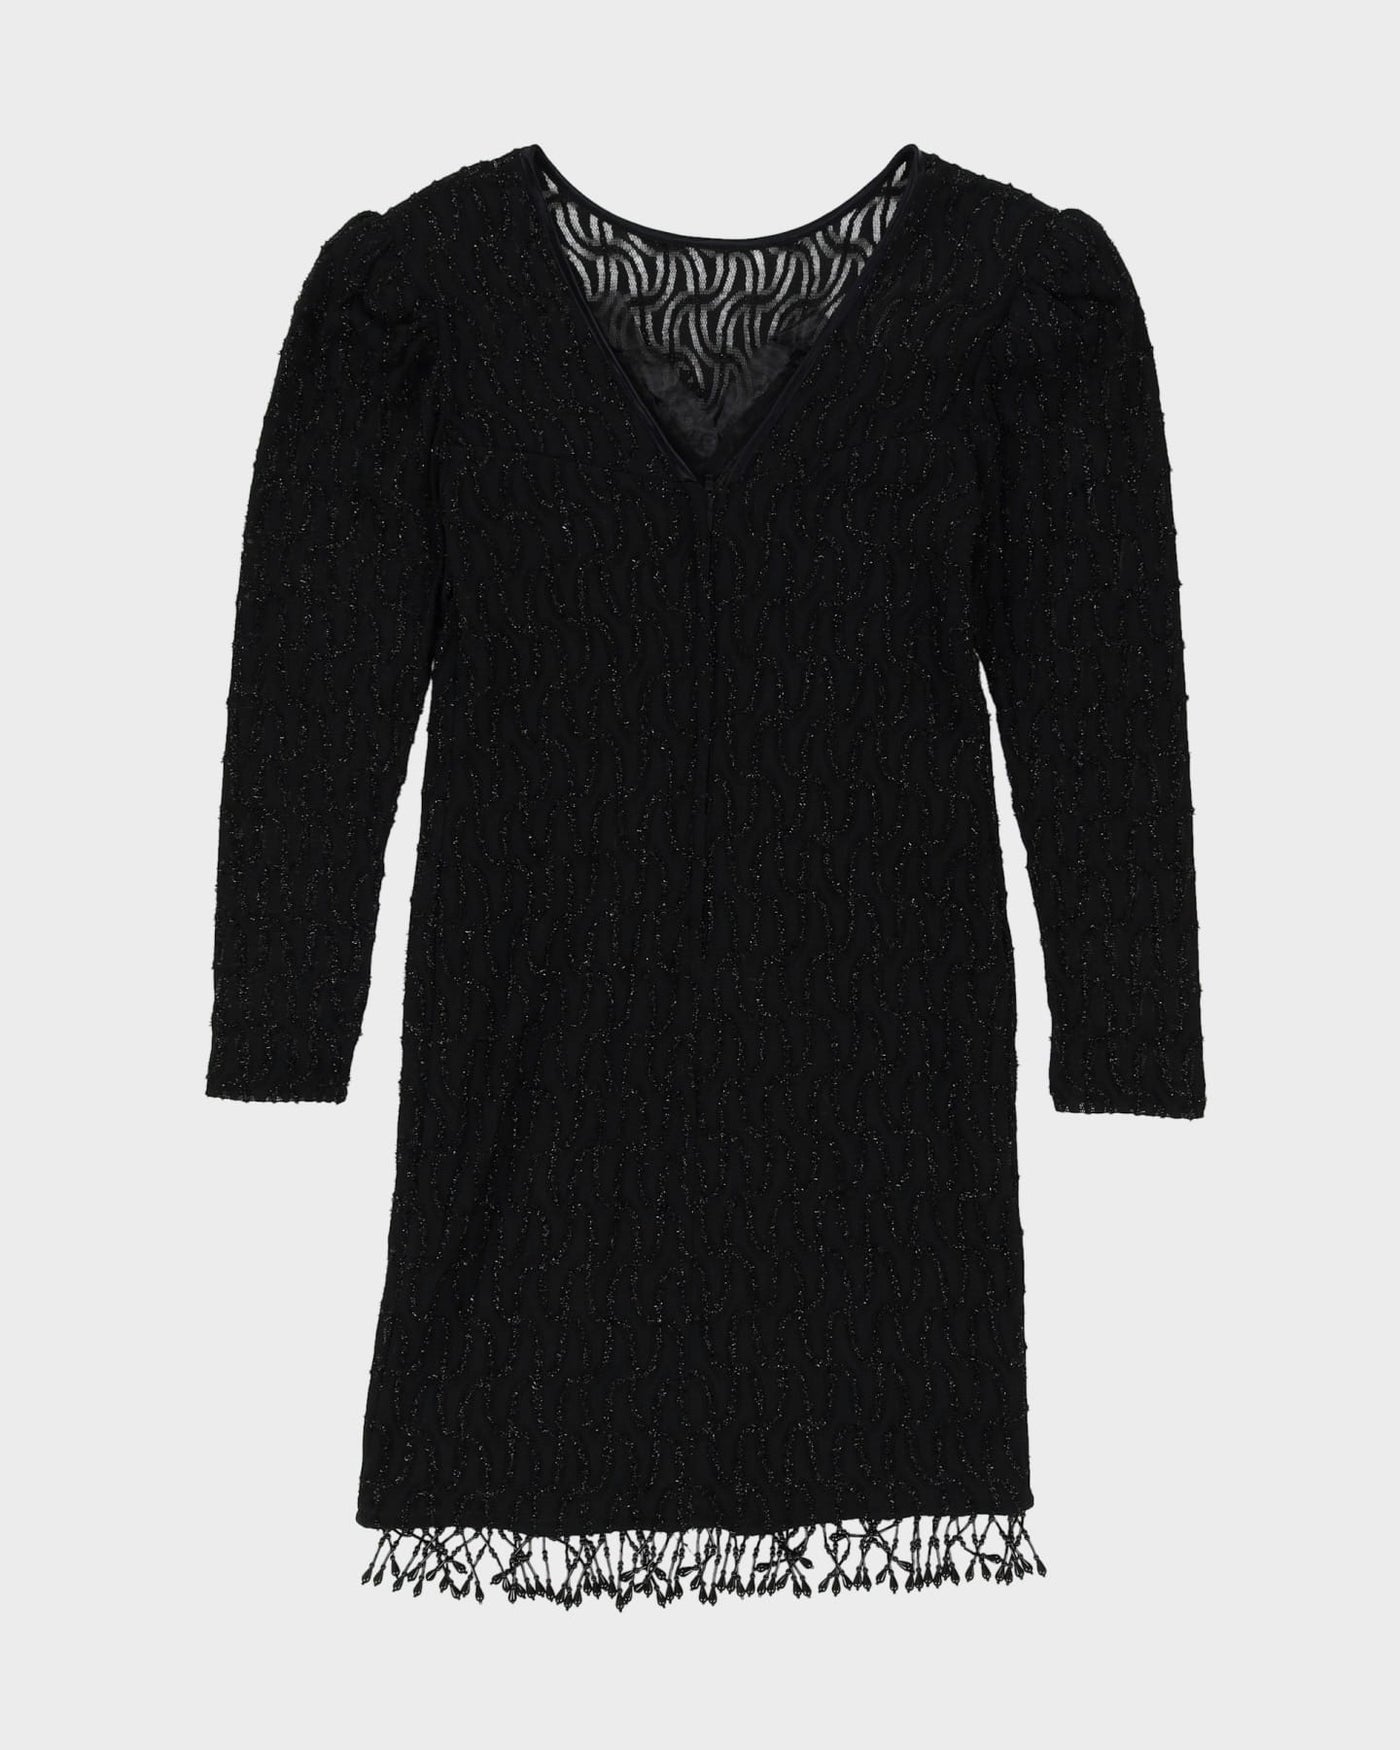 1990s Black Beaded Evening Dress - S